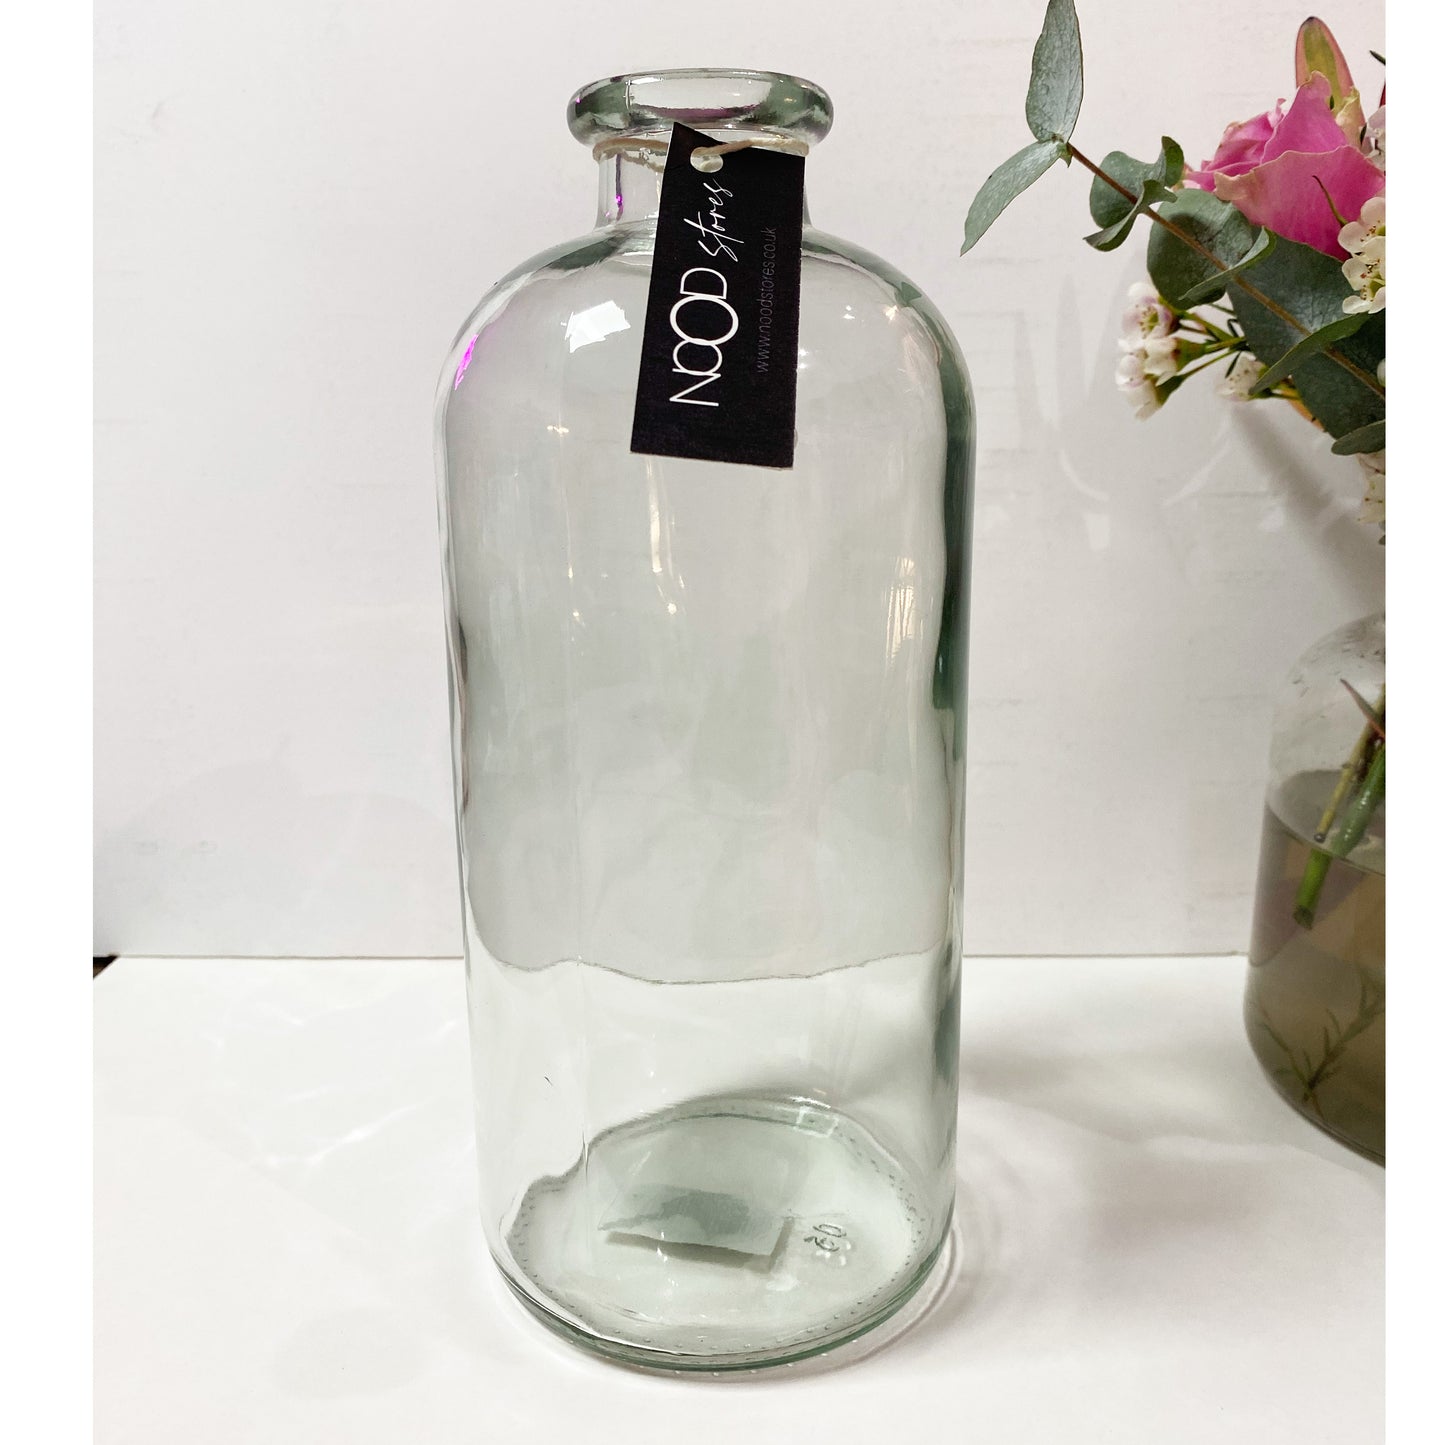 Tall Anthology bottle vase - clear